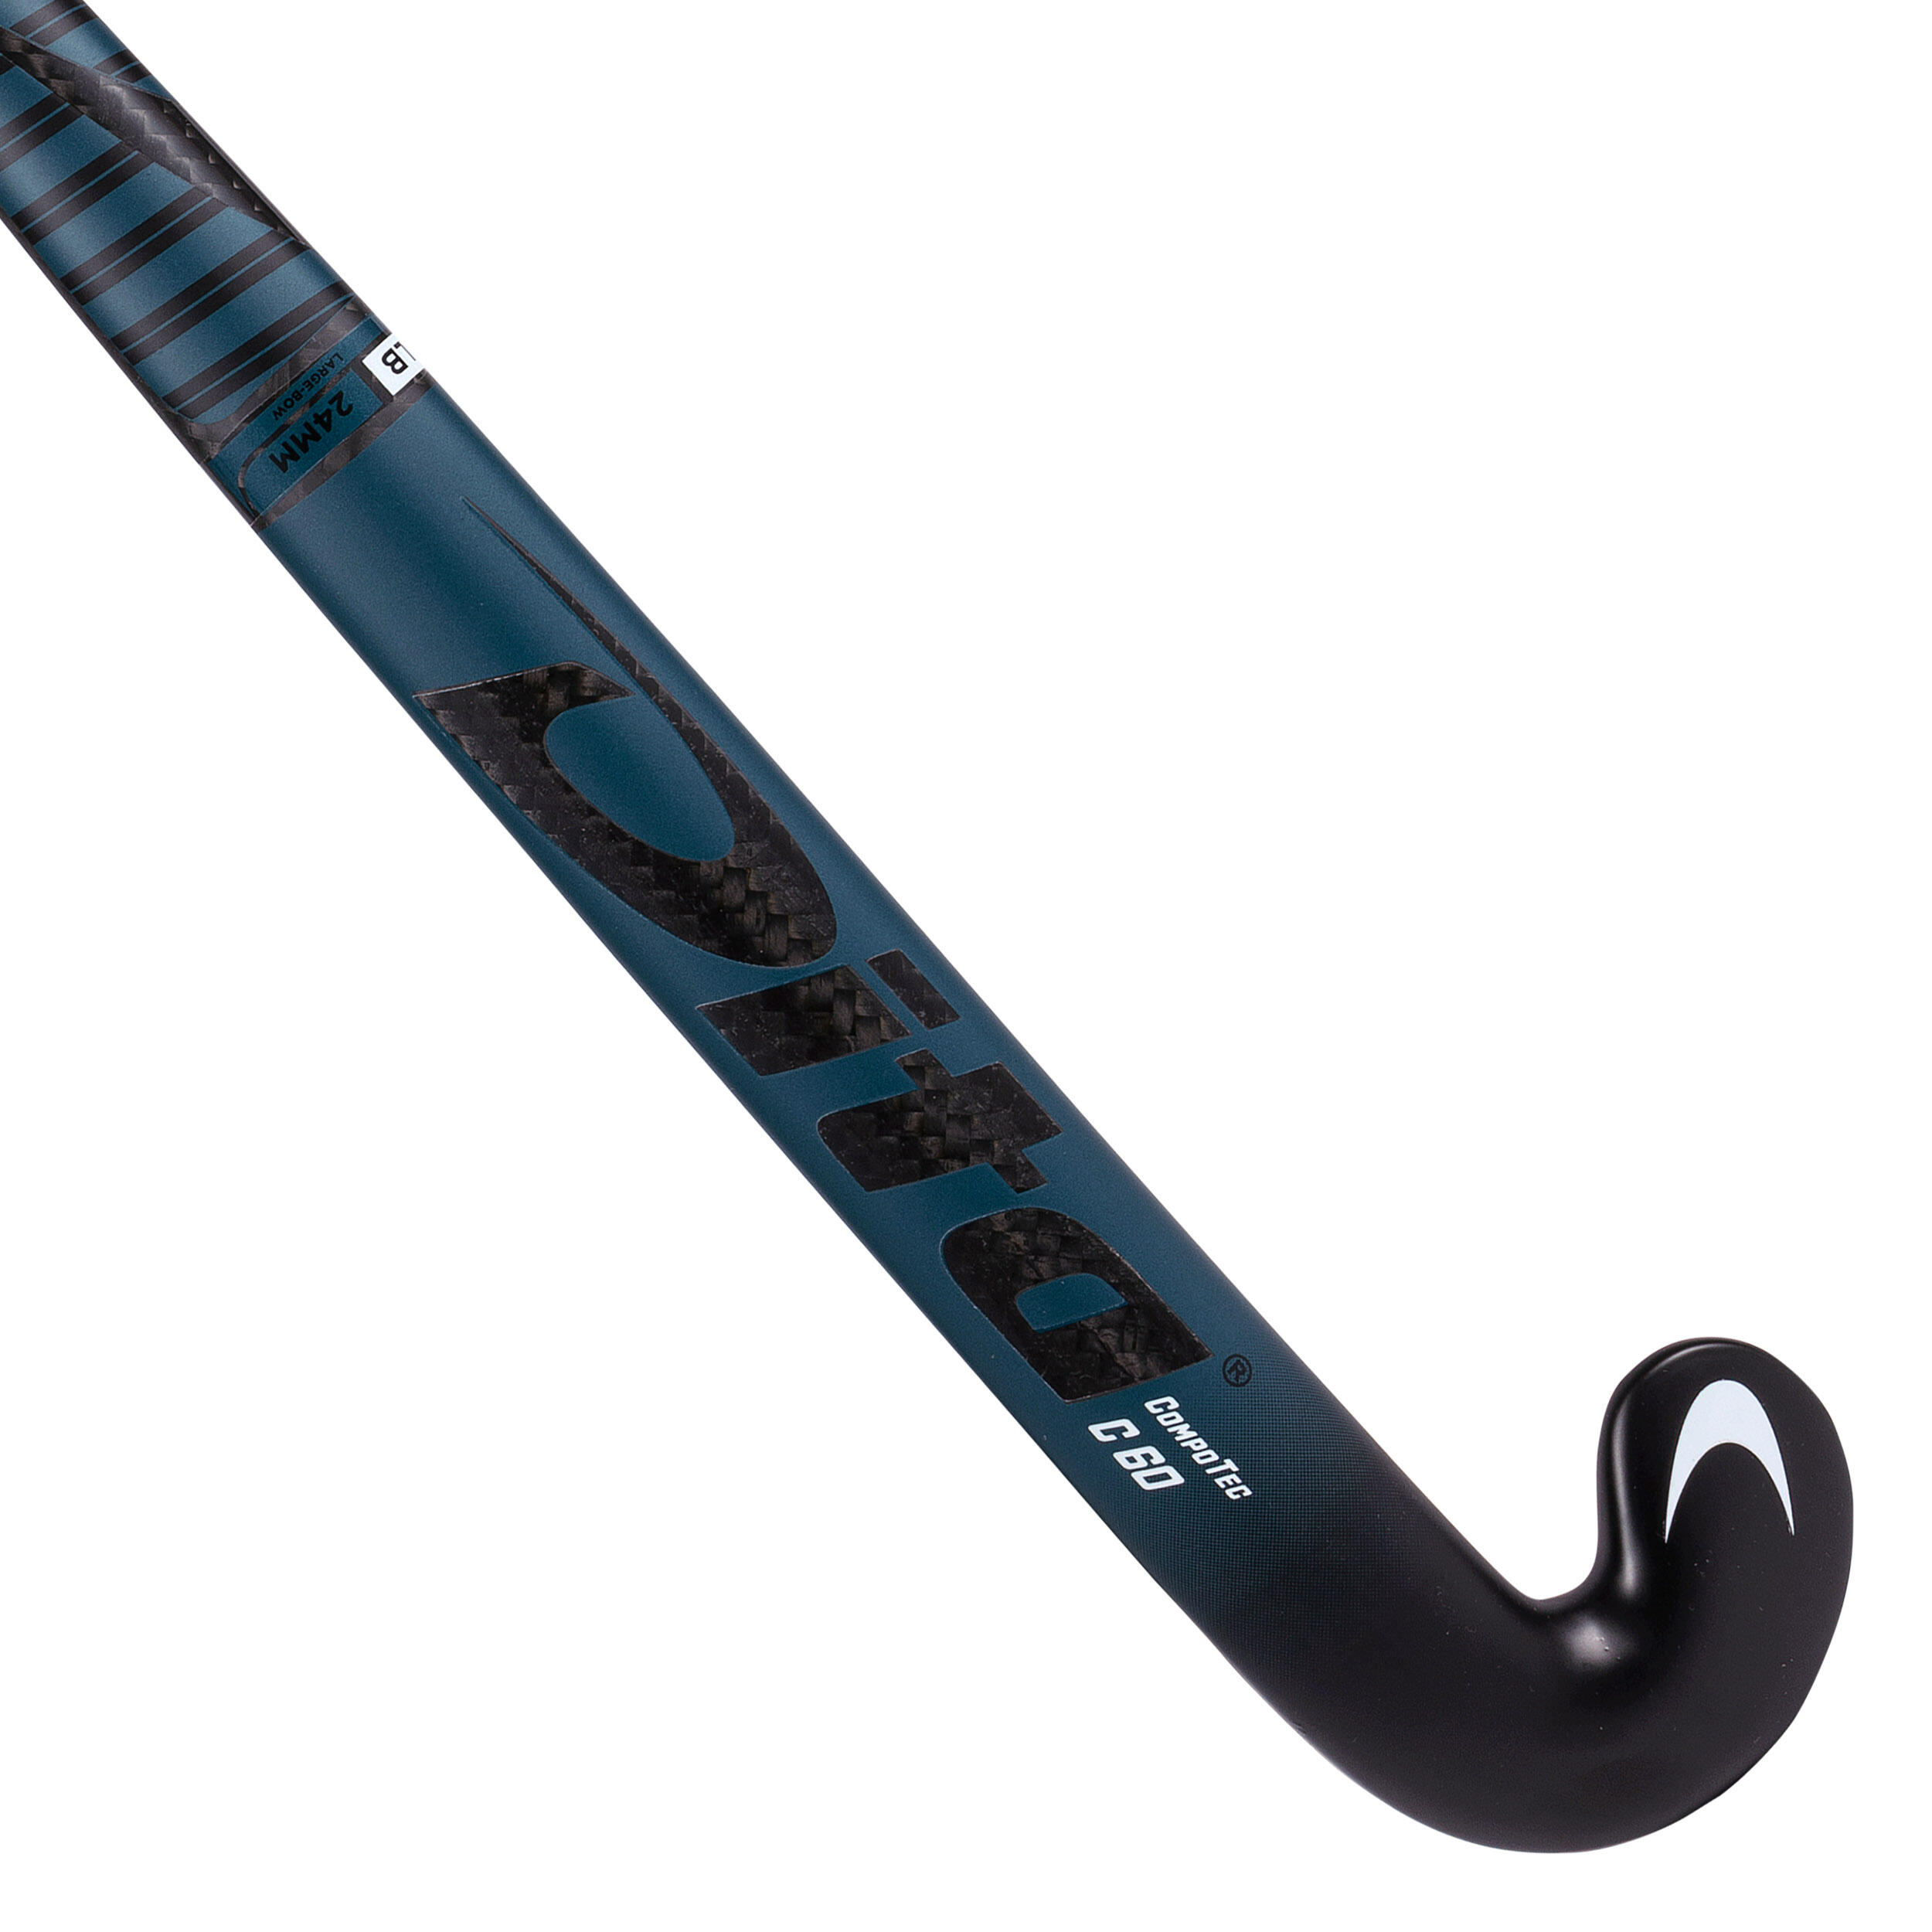 DITA Adult Intermediate 60% Carbon Low Bow Field Hockey Stick CompotecC60 - Dark Turquoise